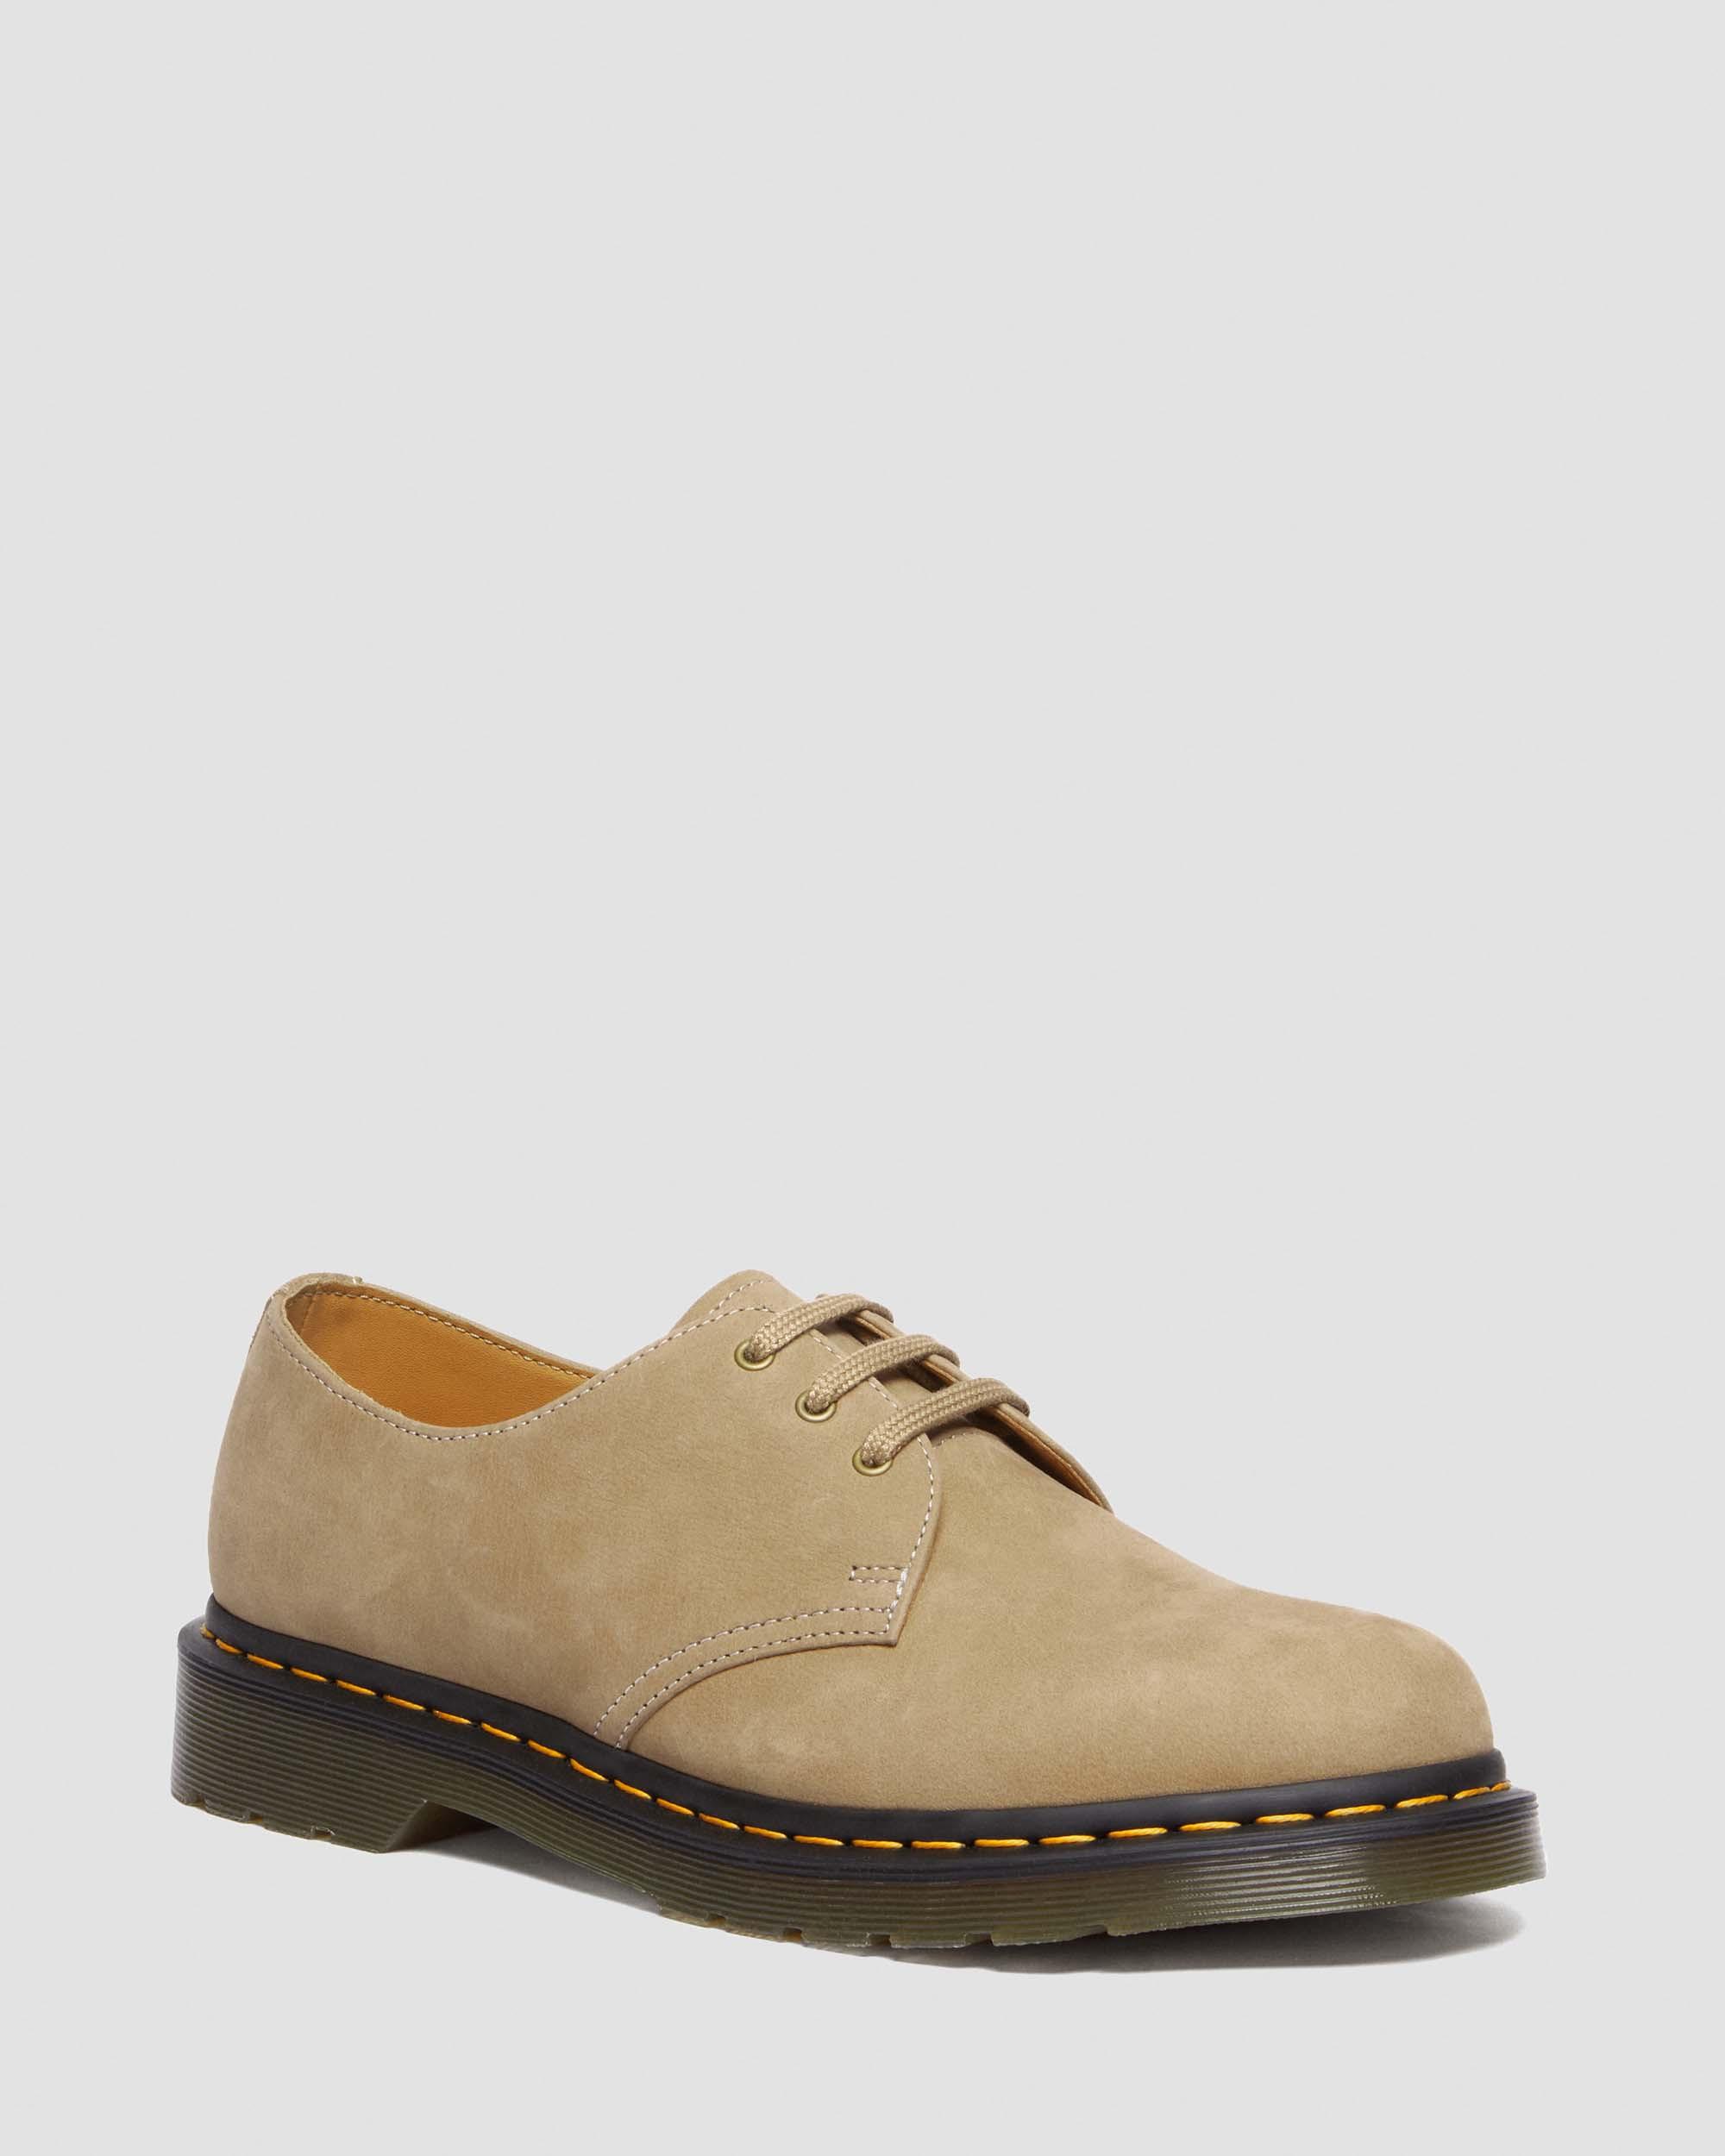 1461 Tumbled Nubuck Leather Oxford Shoes in Savannah Tan